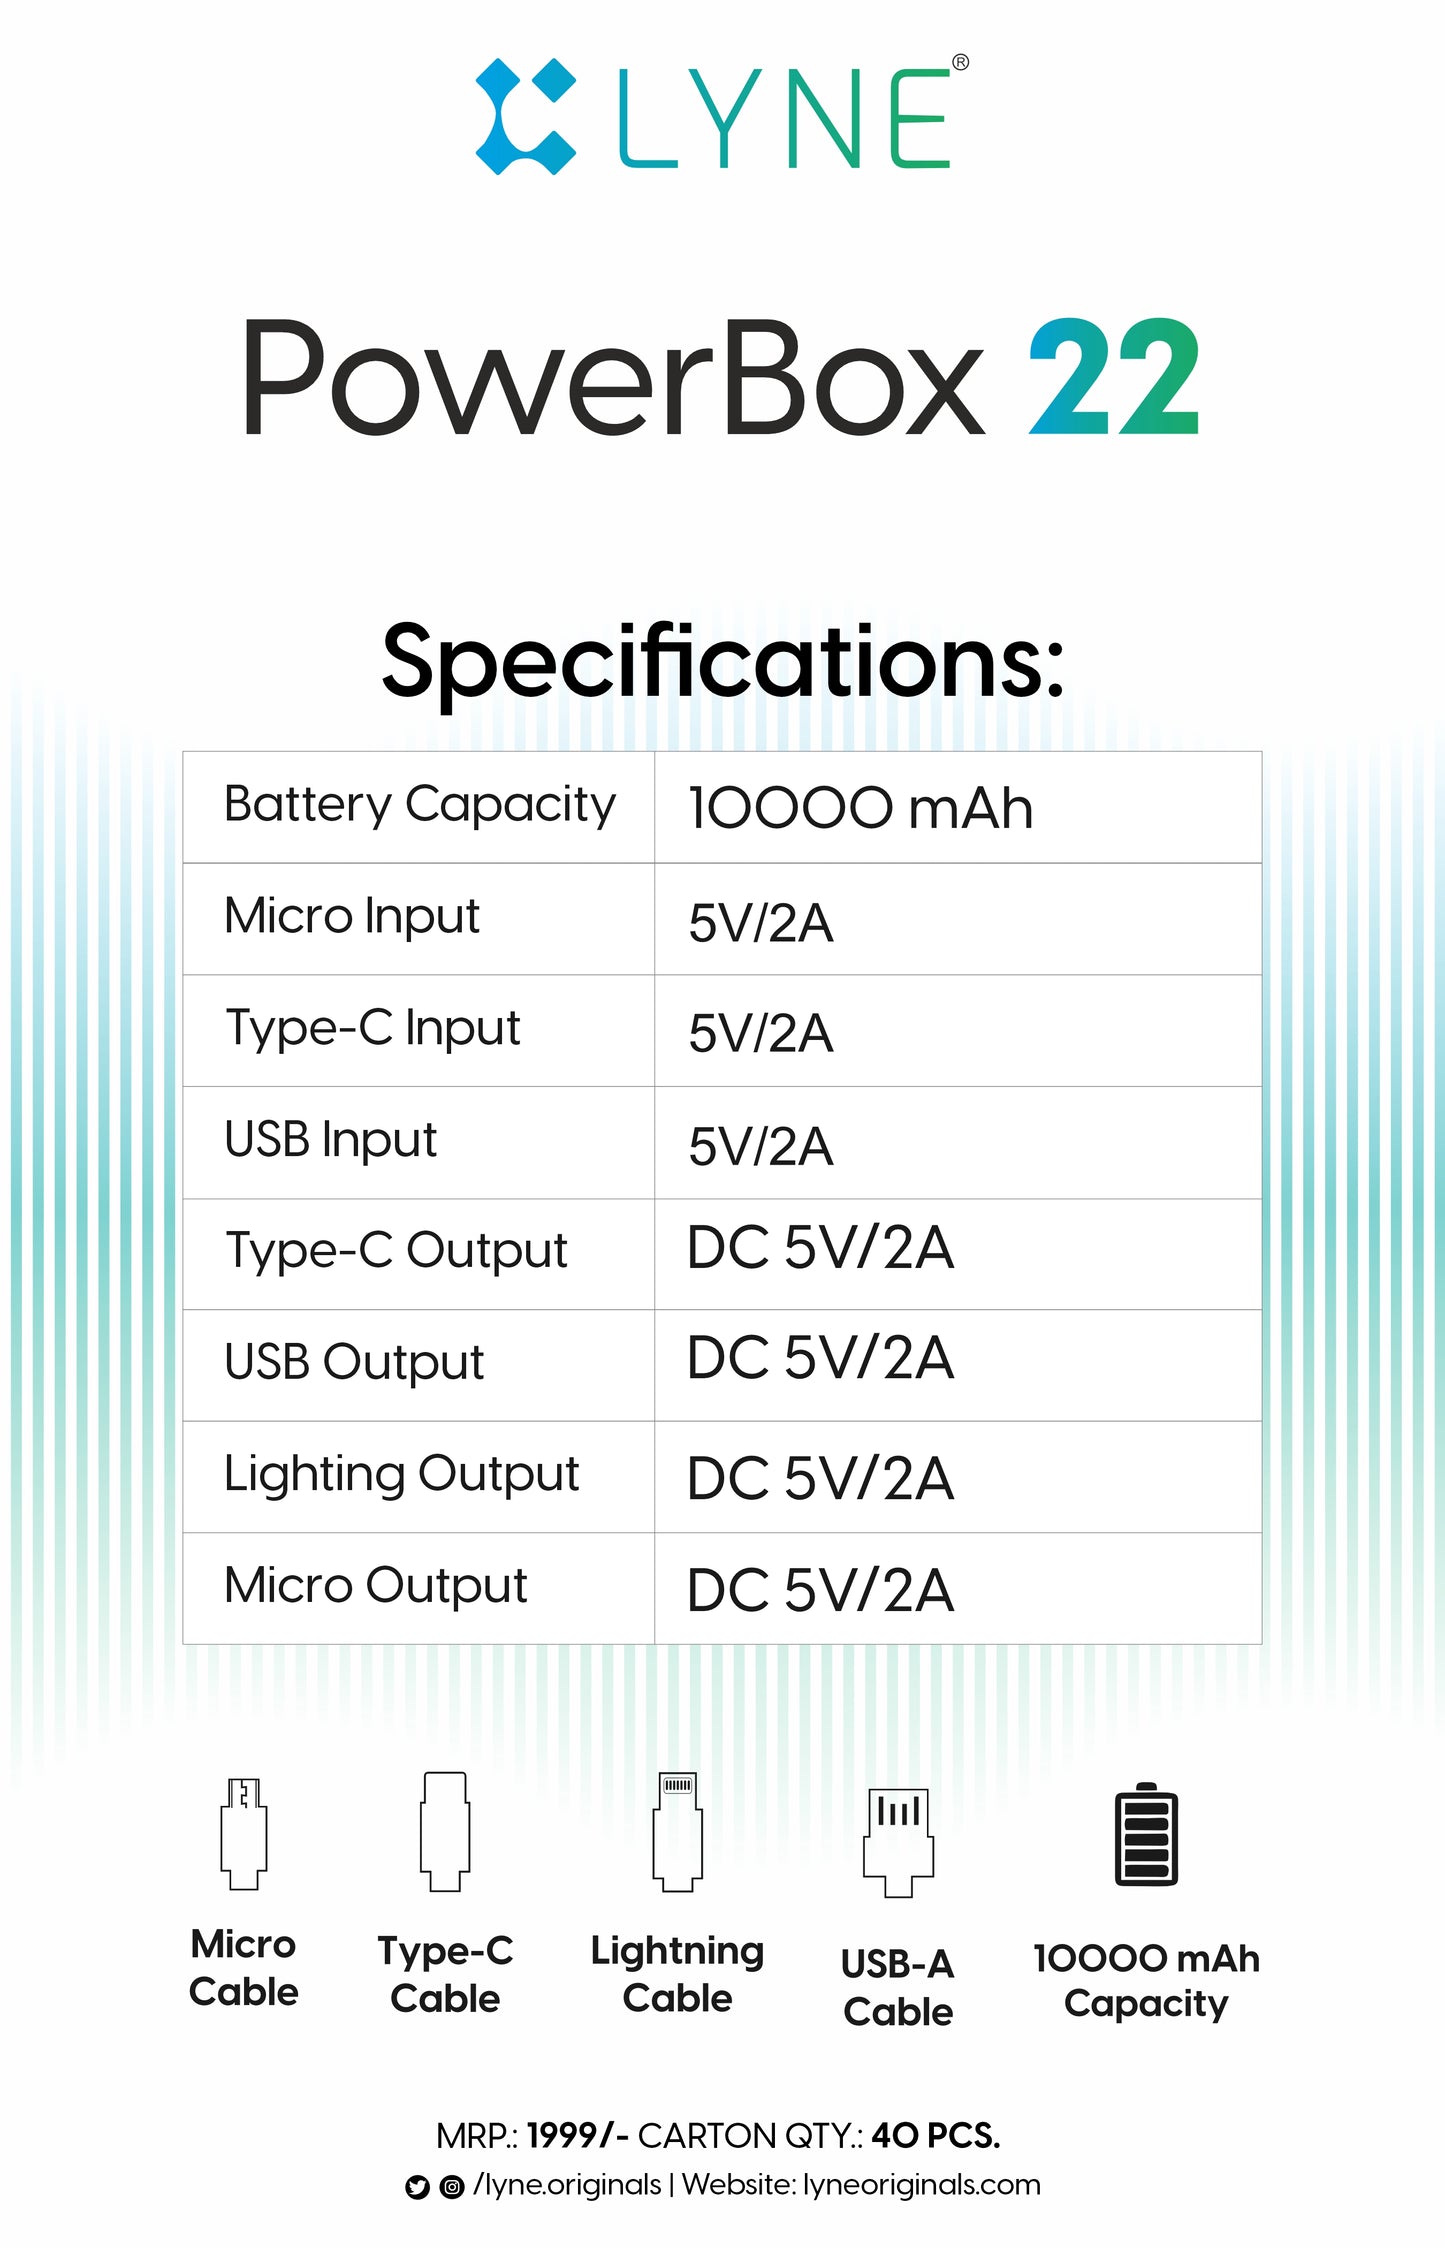 LYNE Powerbox 22 10000 mAh Battery Capacity with LED Flash Lights